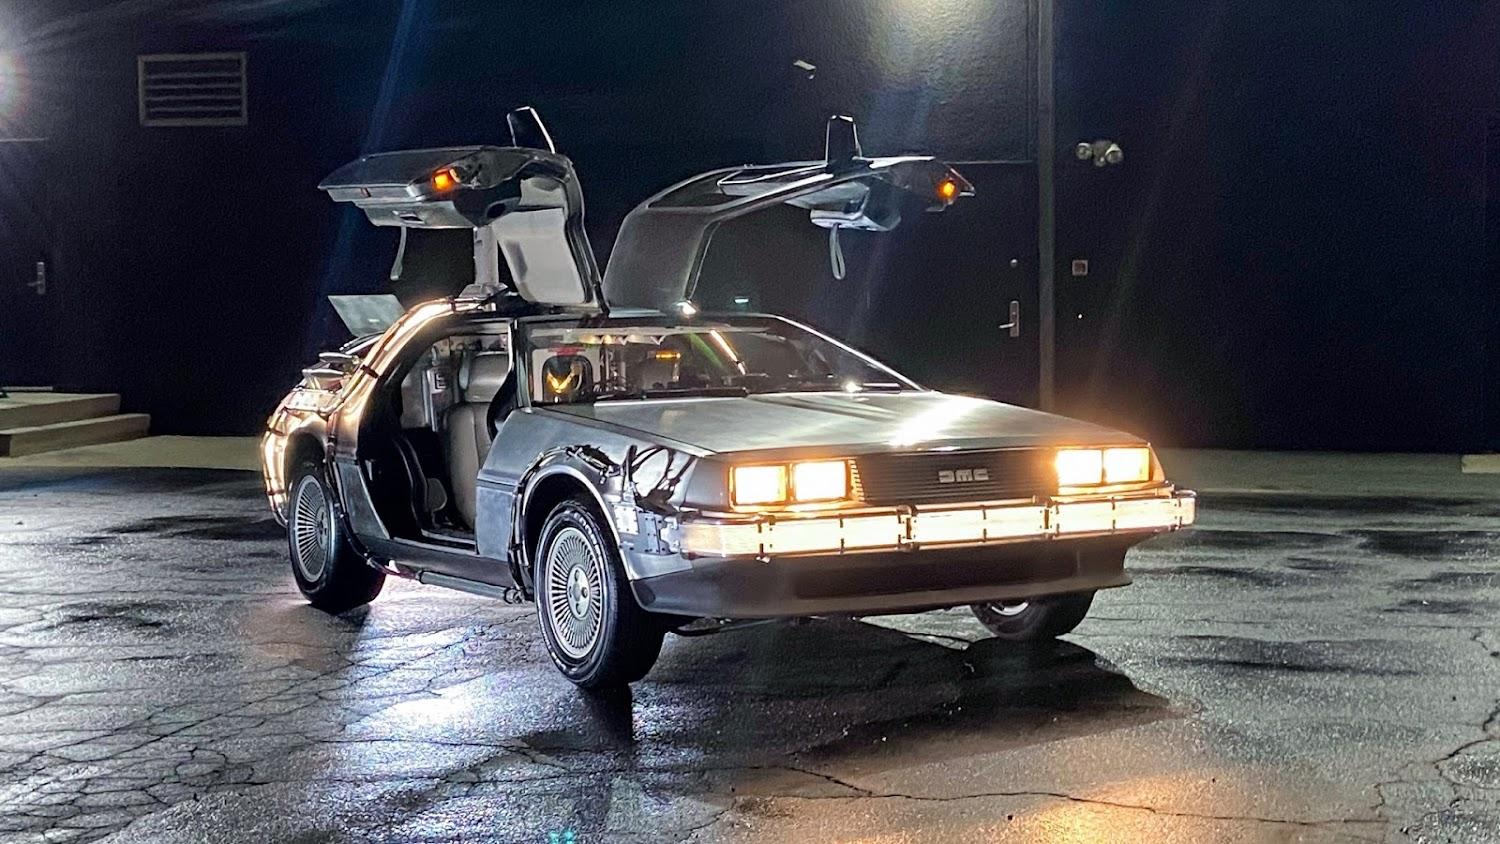 Replica 'Back to the Future' DeLorean DMC-12 on auction for charity